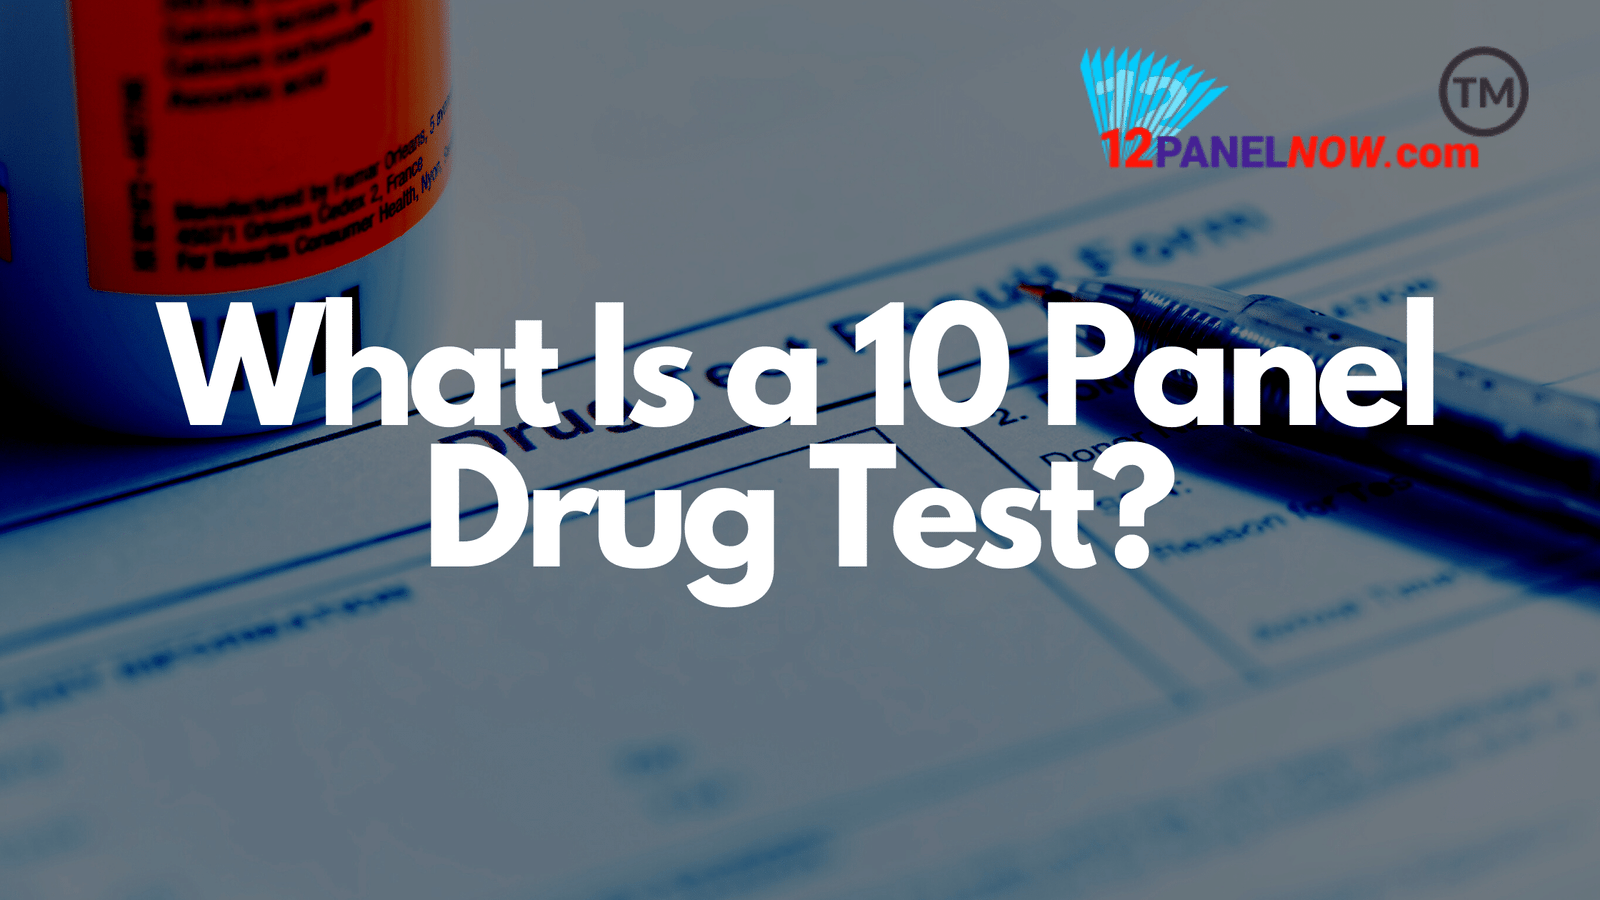 10 Panel Urine Drug Test